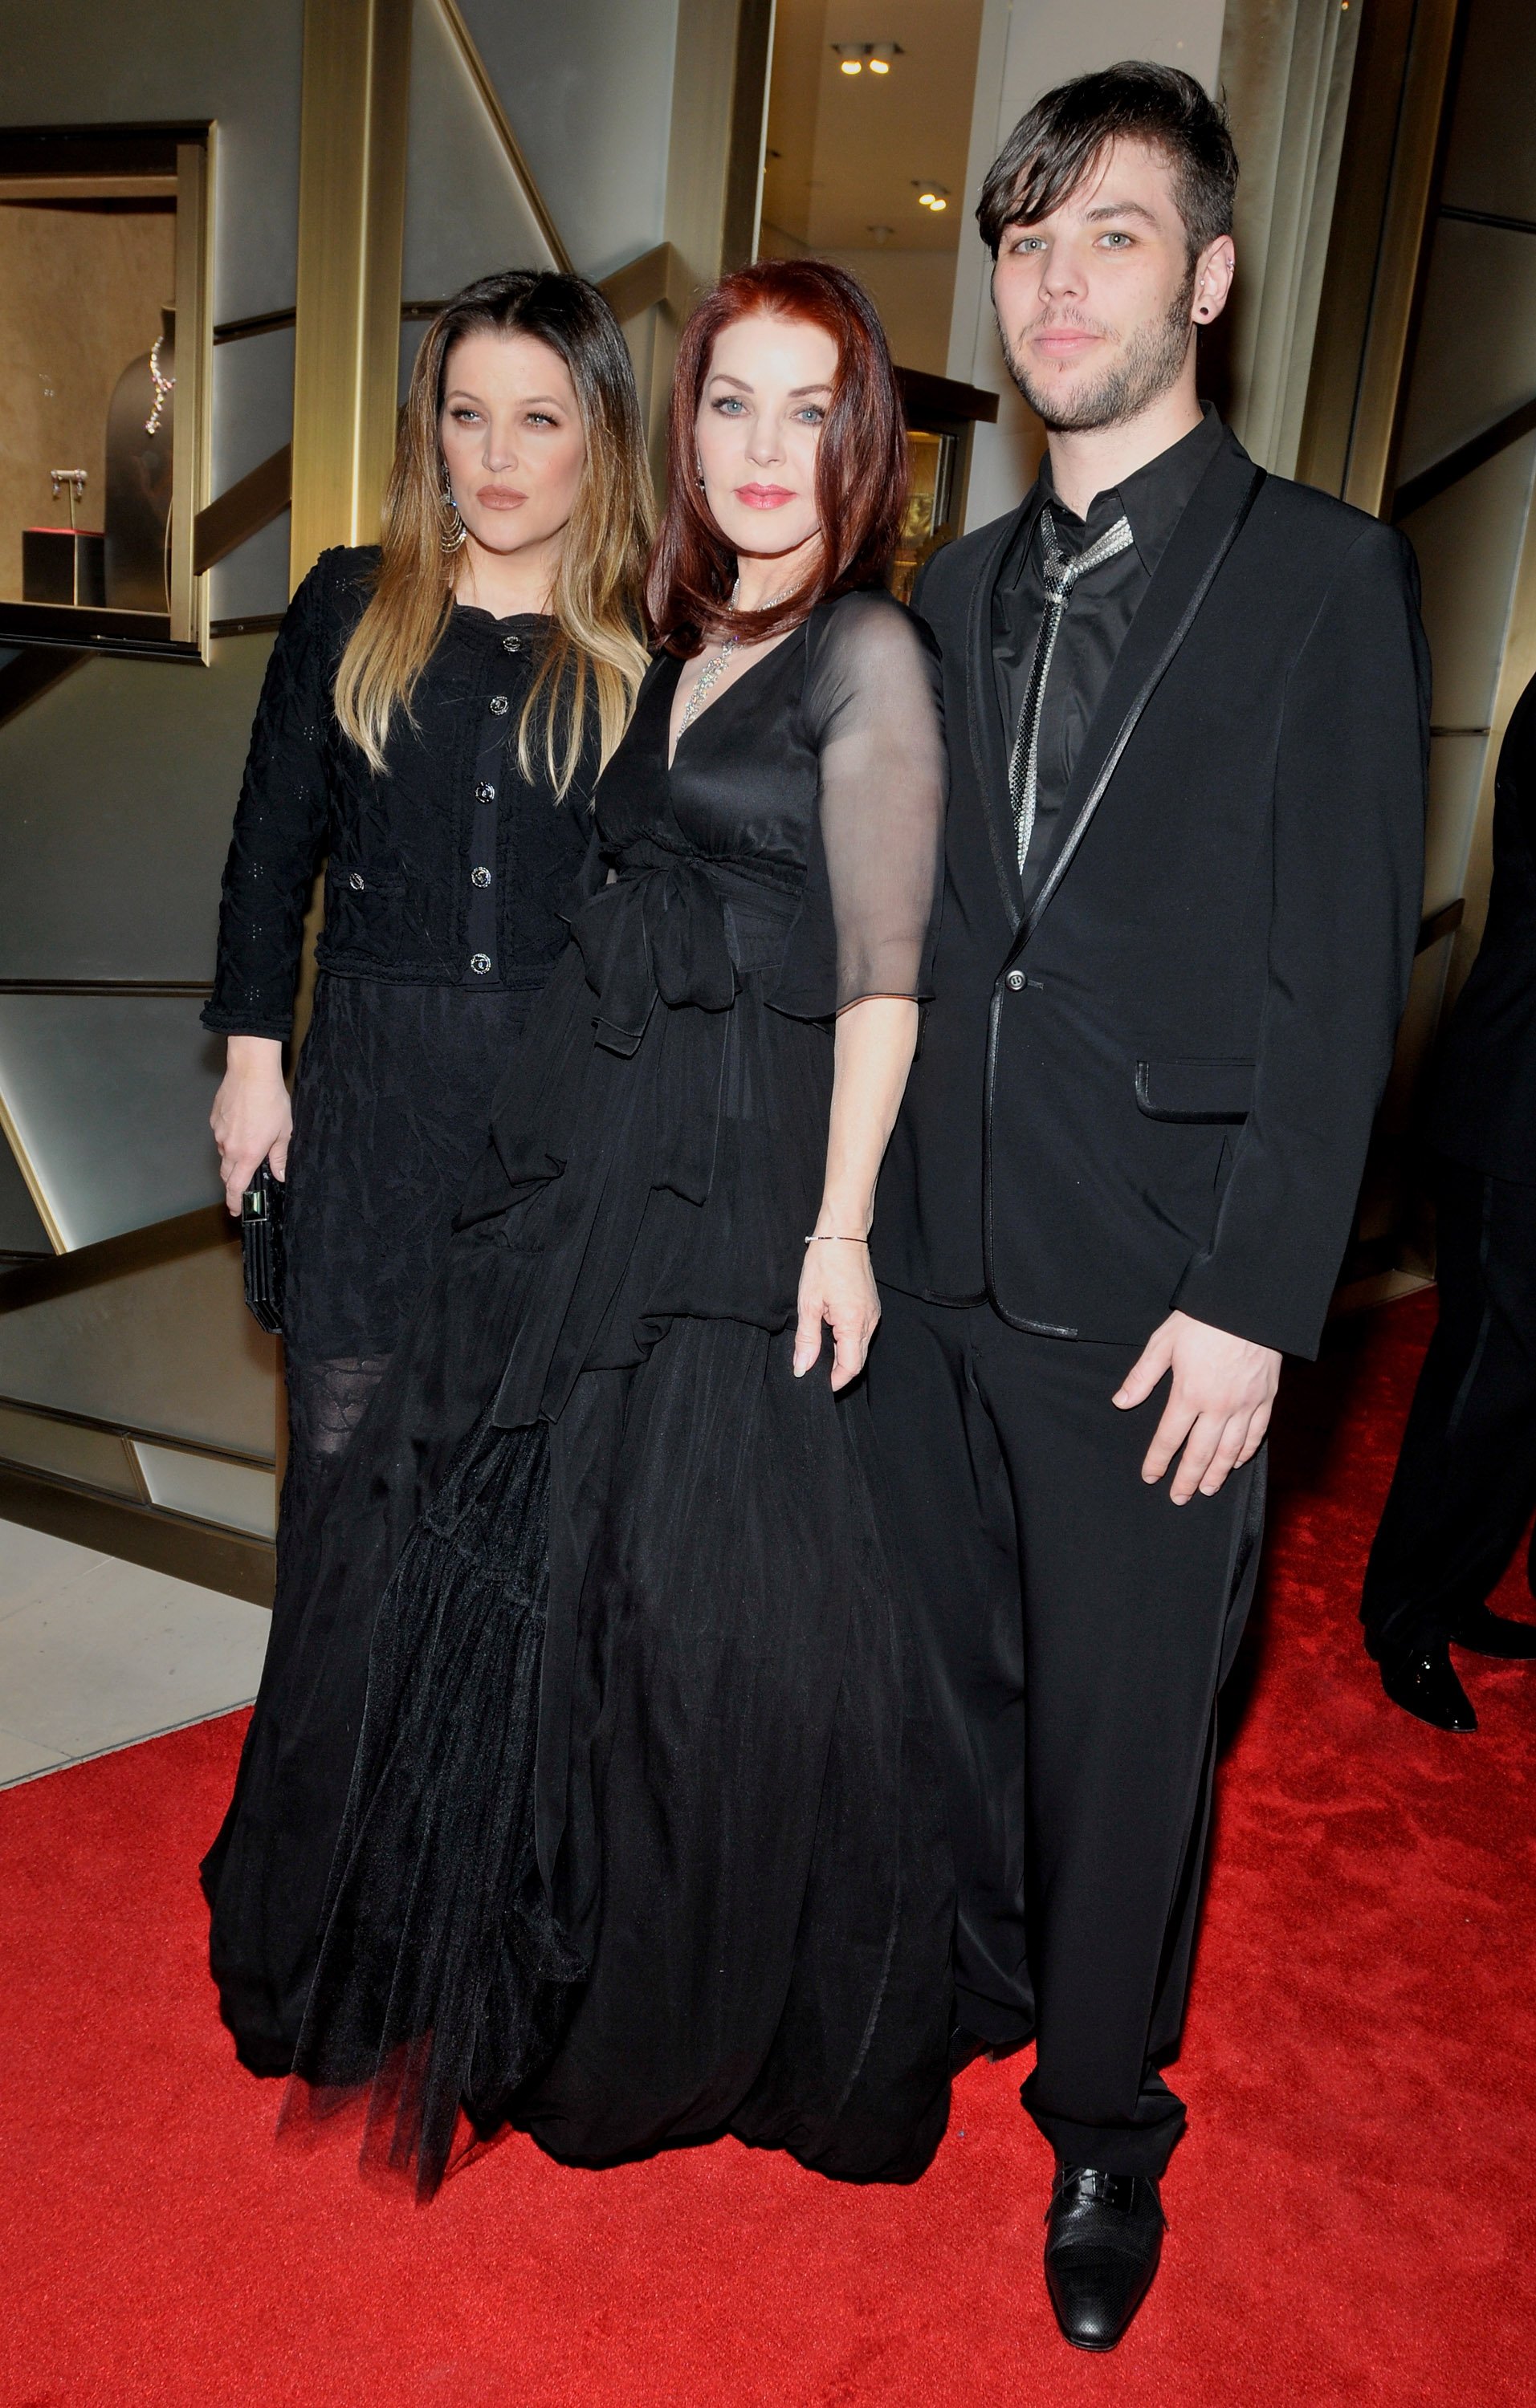 Lisa Marie Presley, Priscilla Presley and Navarone Garibaldi on January 29, 2011 in Las Vegas, Nevada | Source: Getty Images